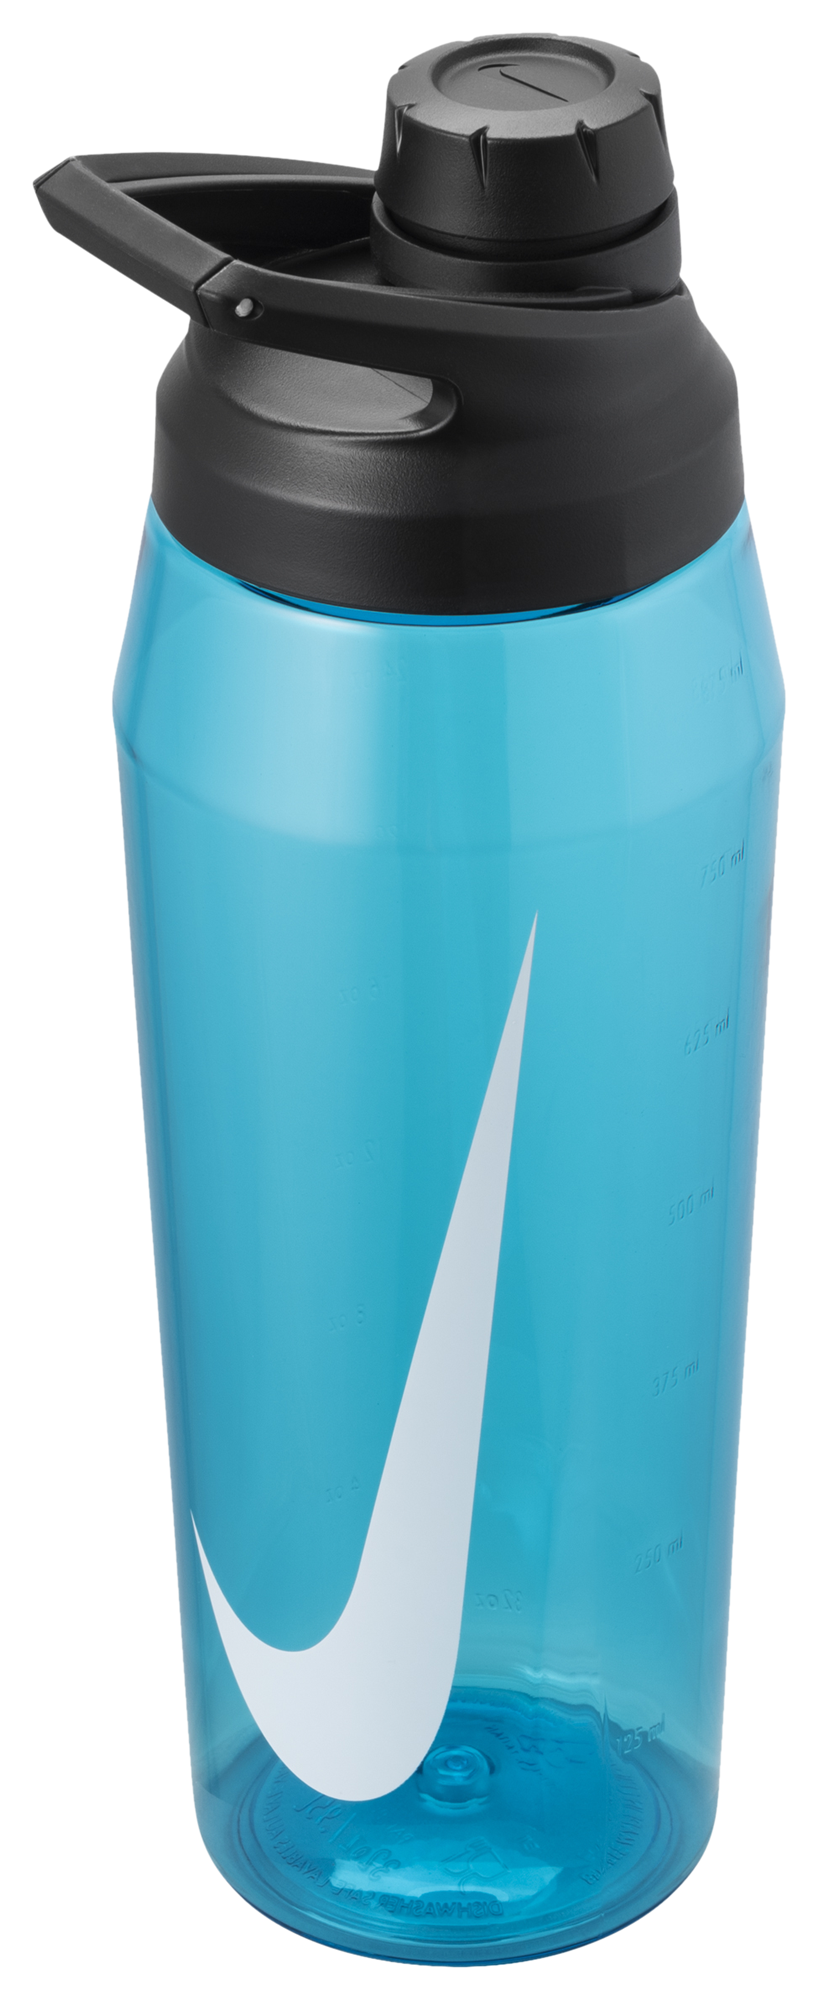 Nike Hypercharge Chug 32 oz. Water Bottle in Black